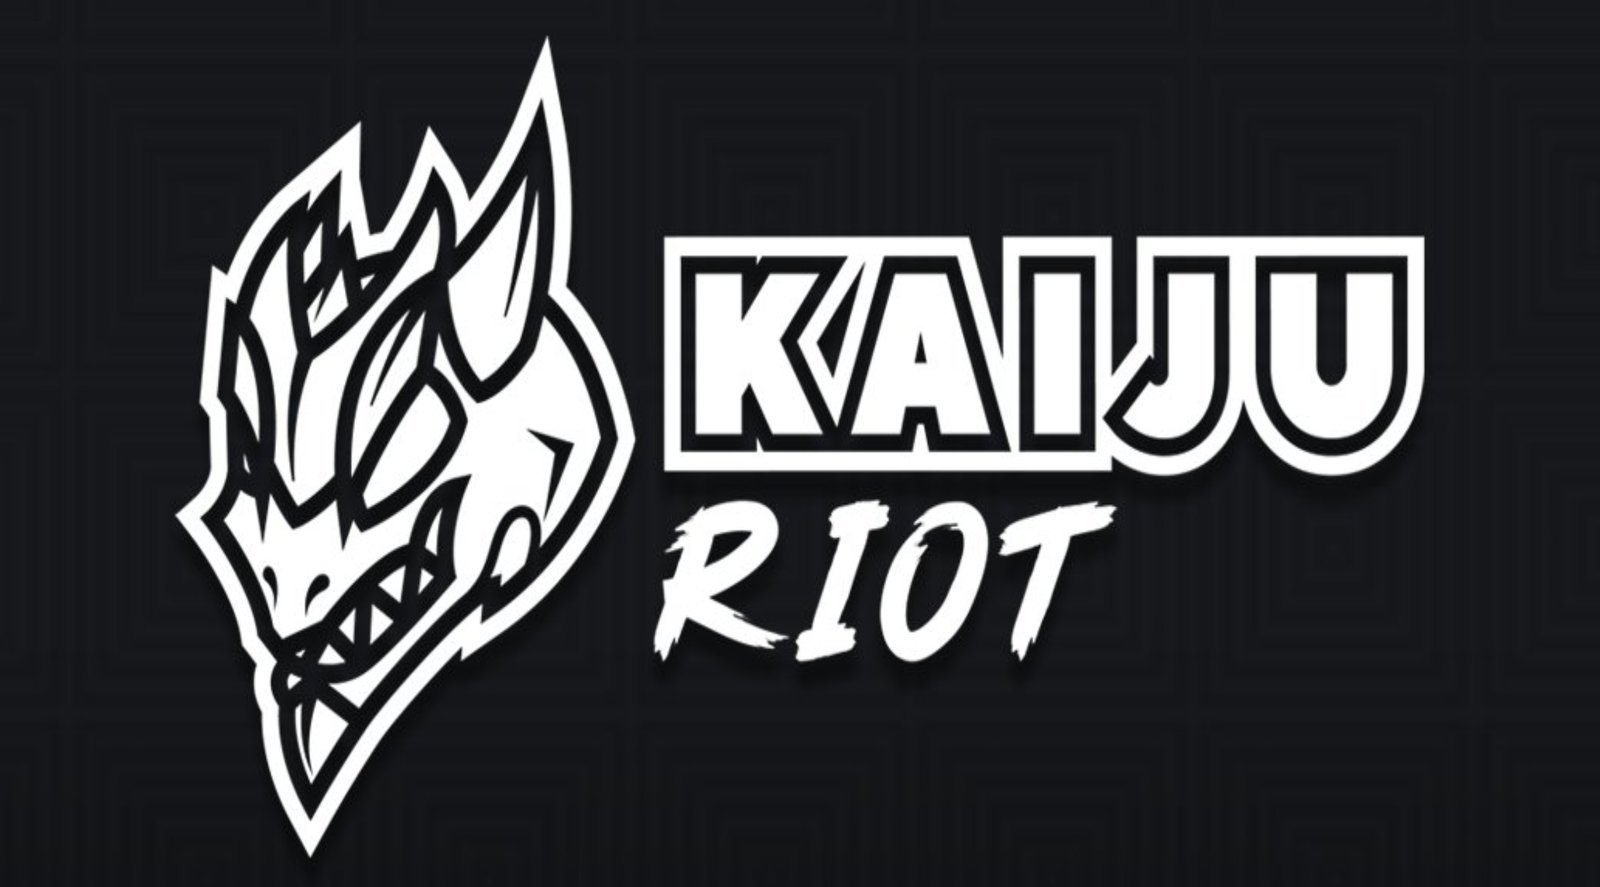 Kaijuriot's account image